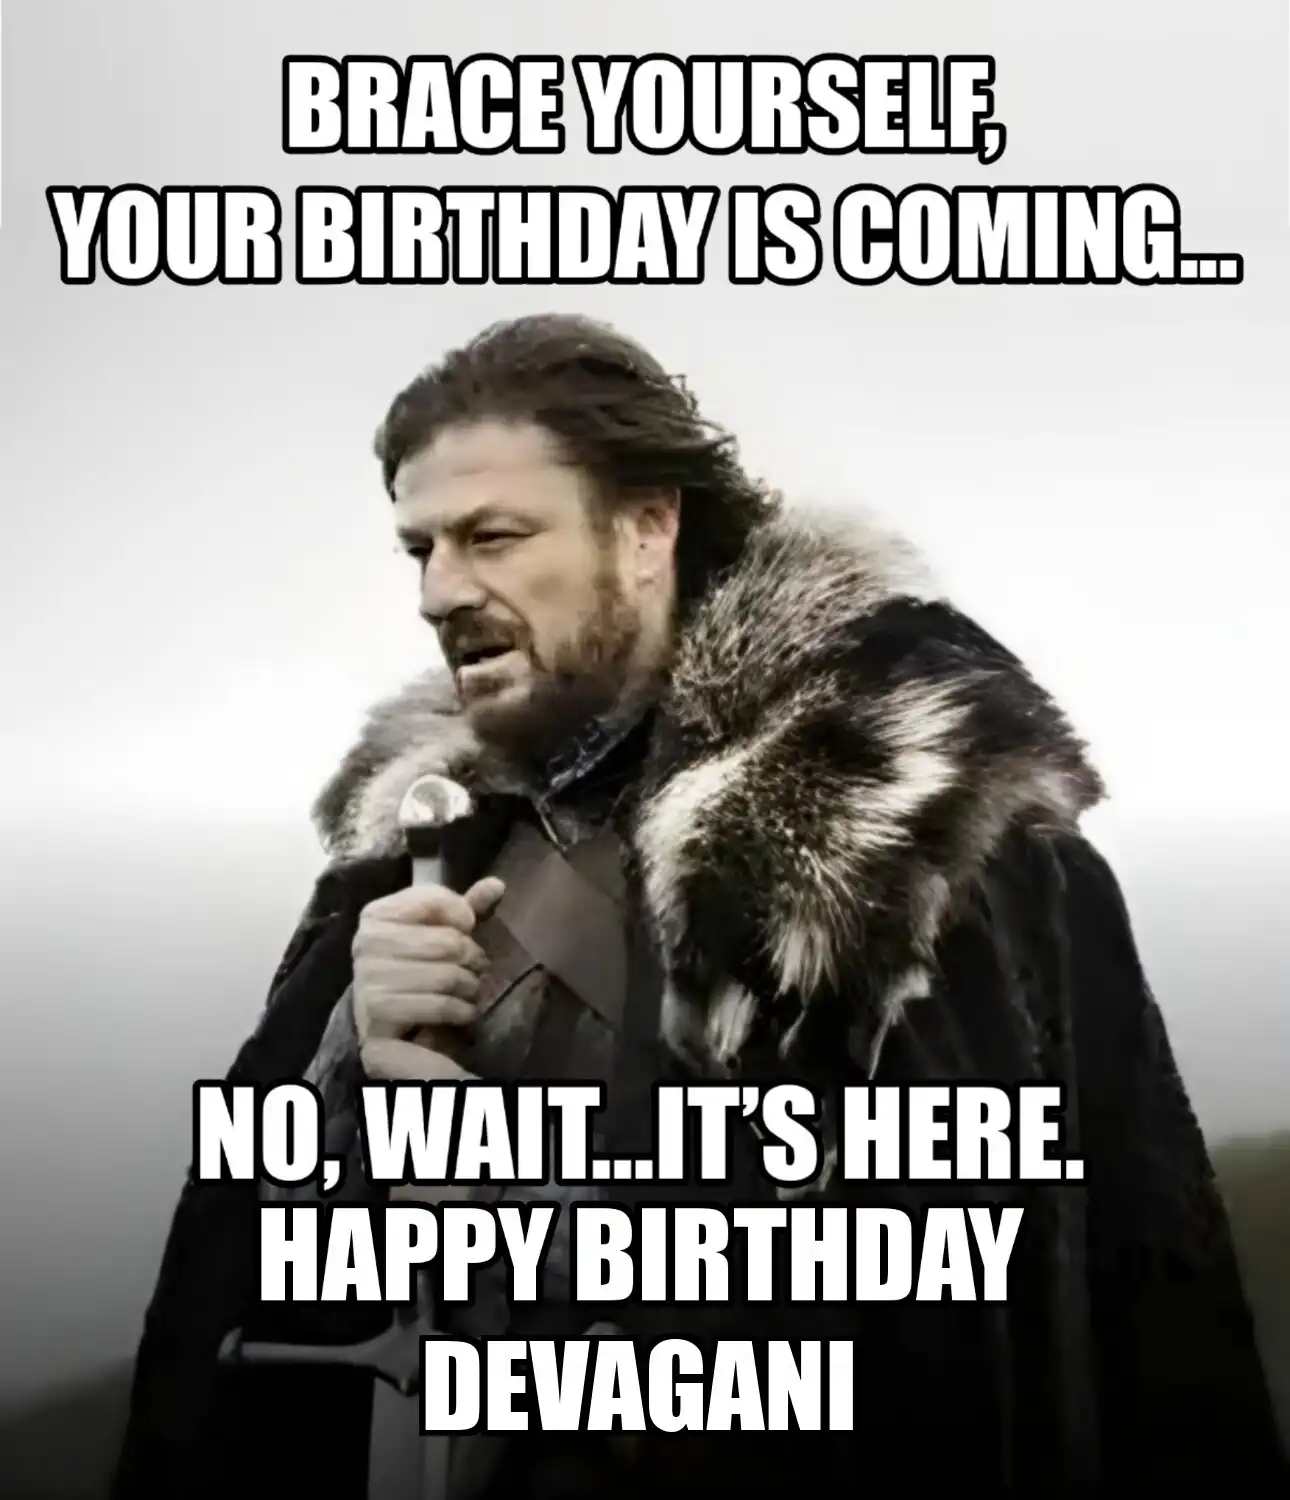 Happy Birthday Devagani Brace Yourself Your Birthday Is Coming Meme